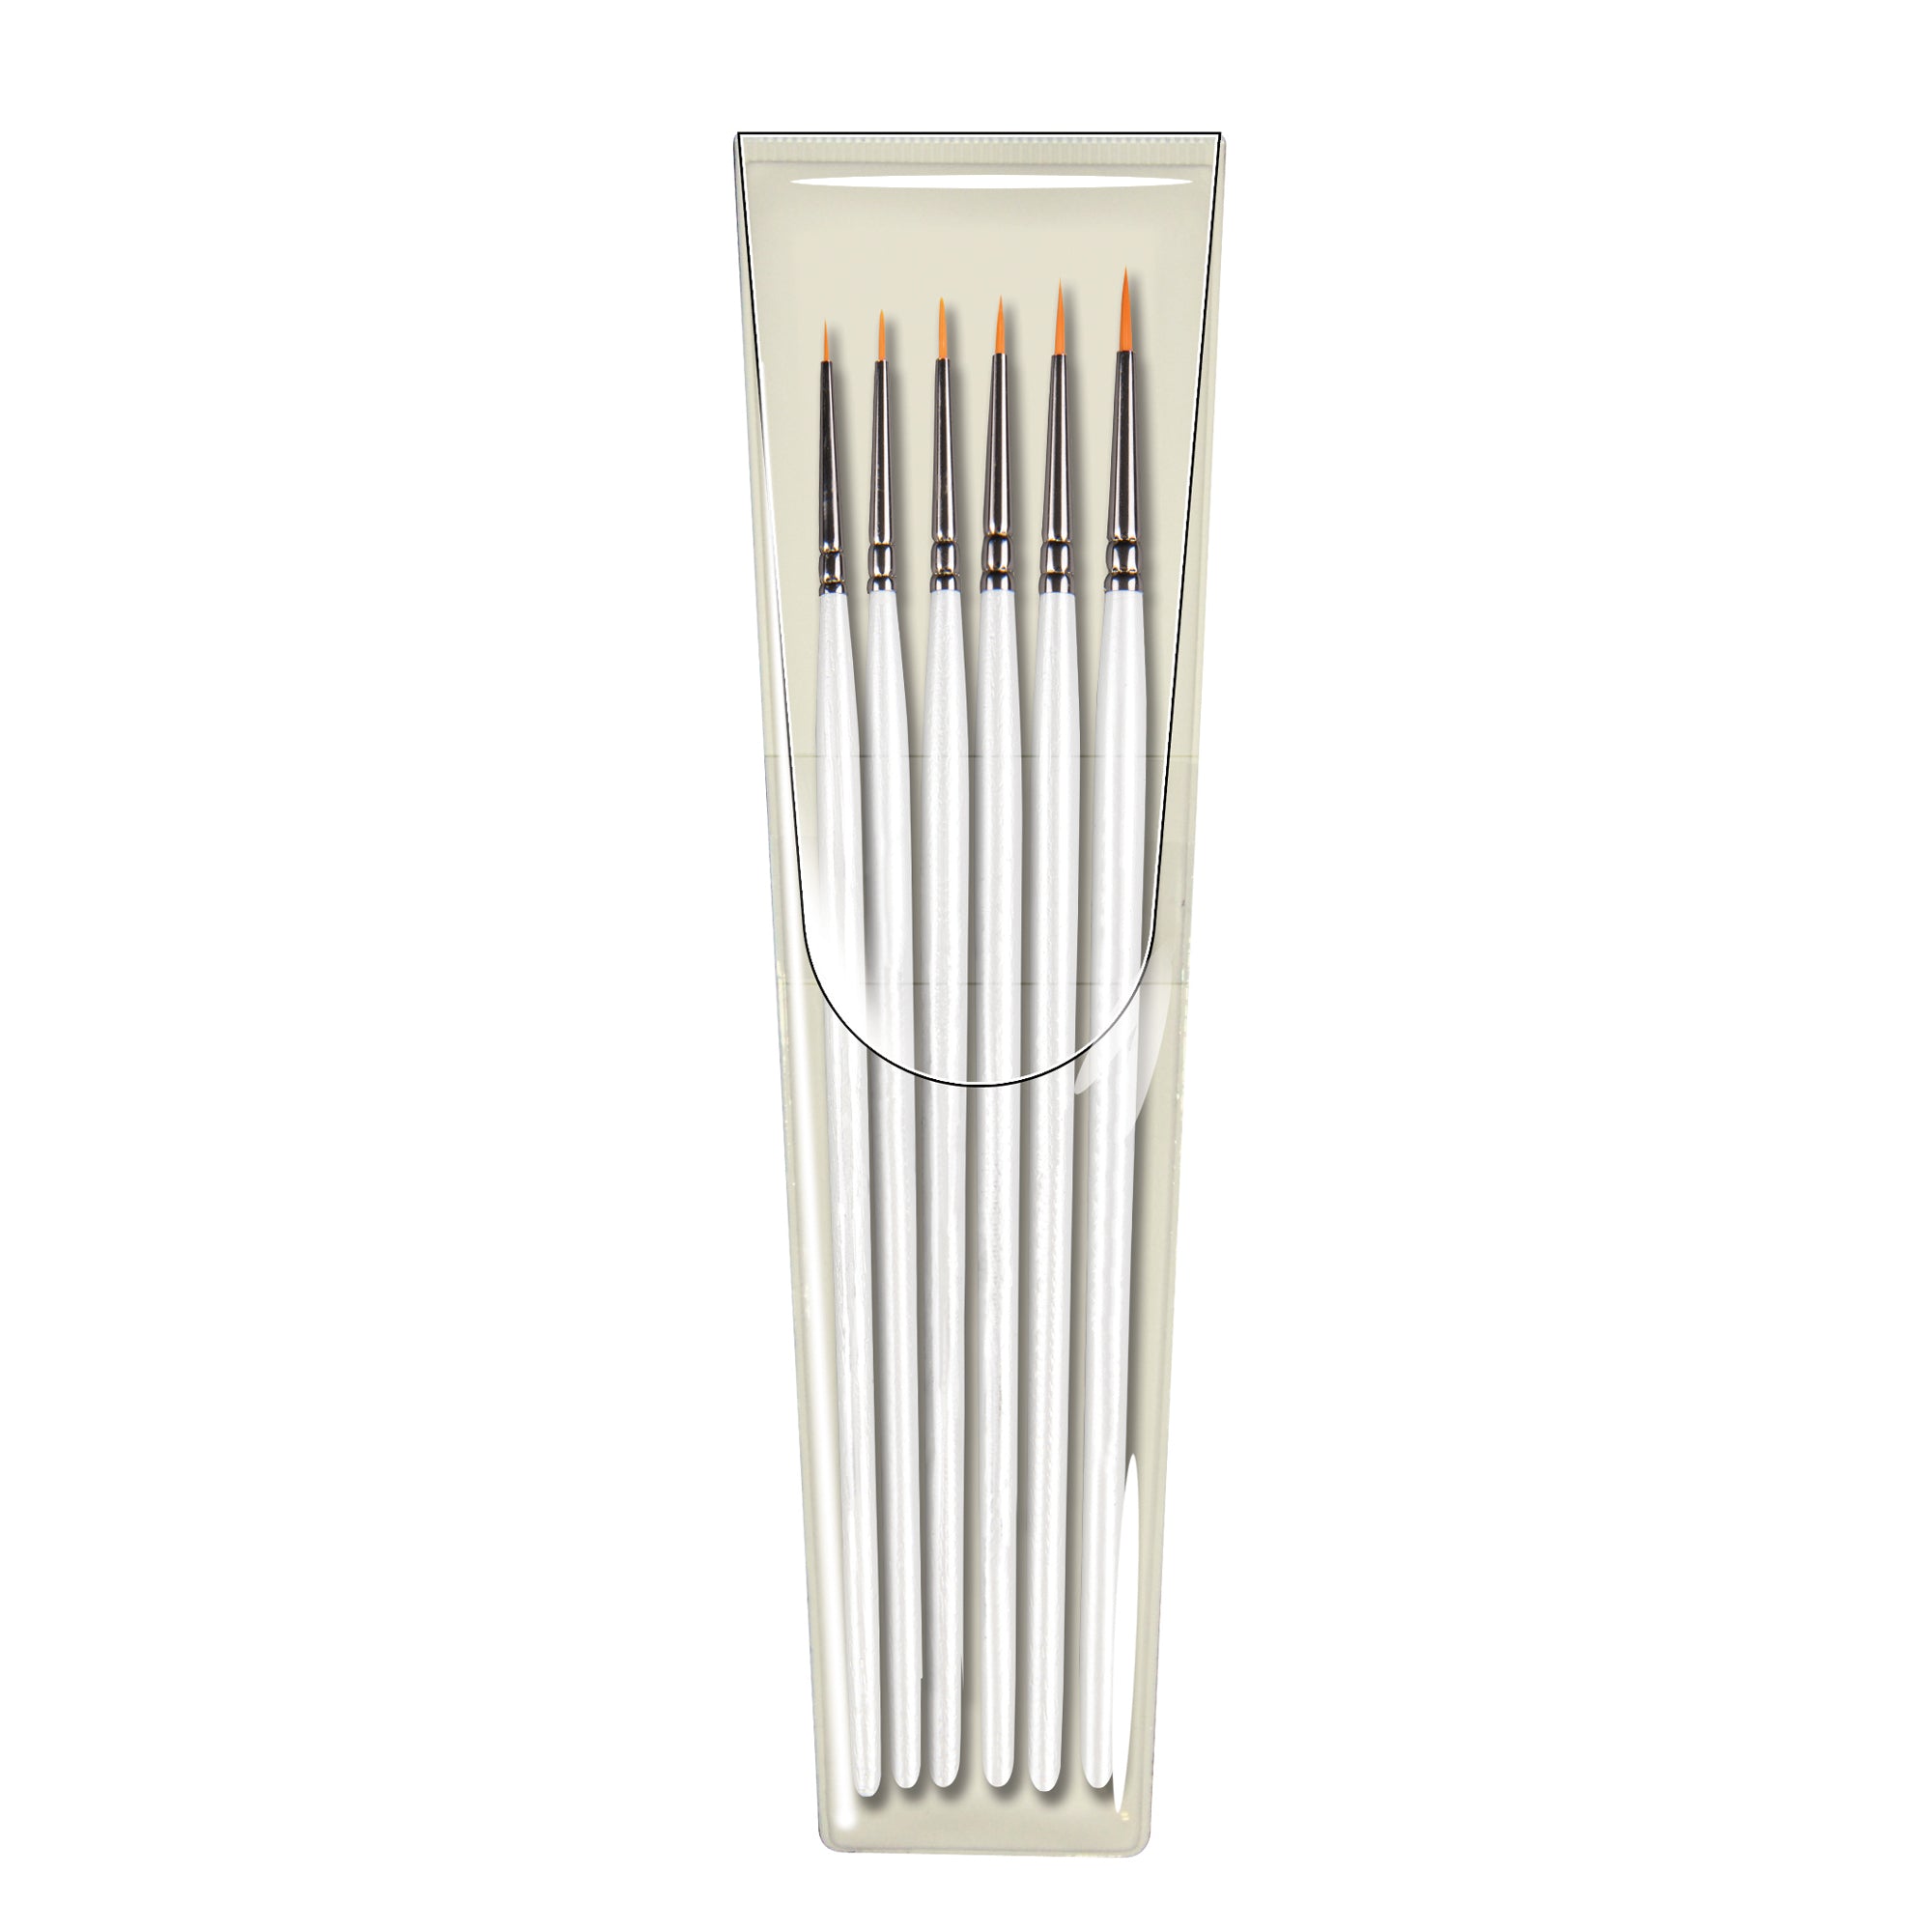 Pro Arte Masterstroke Miniature Brushes - Set of 6 in Packaging 